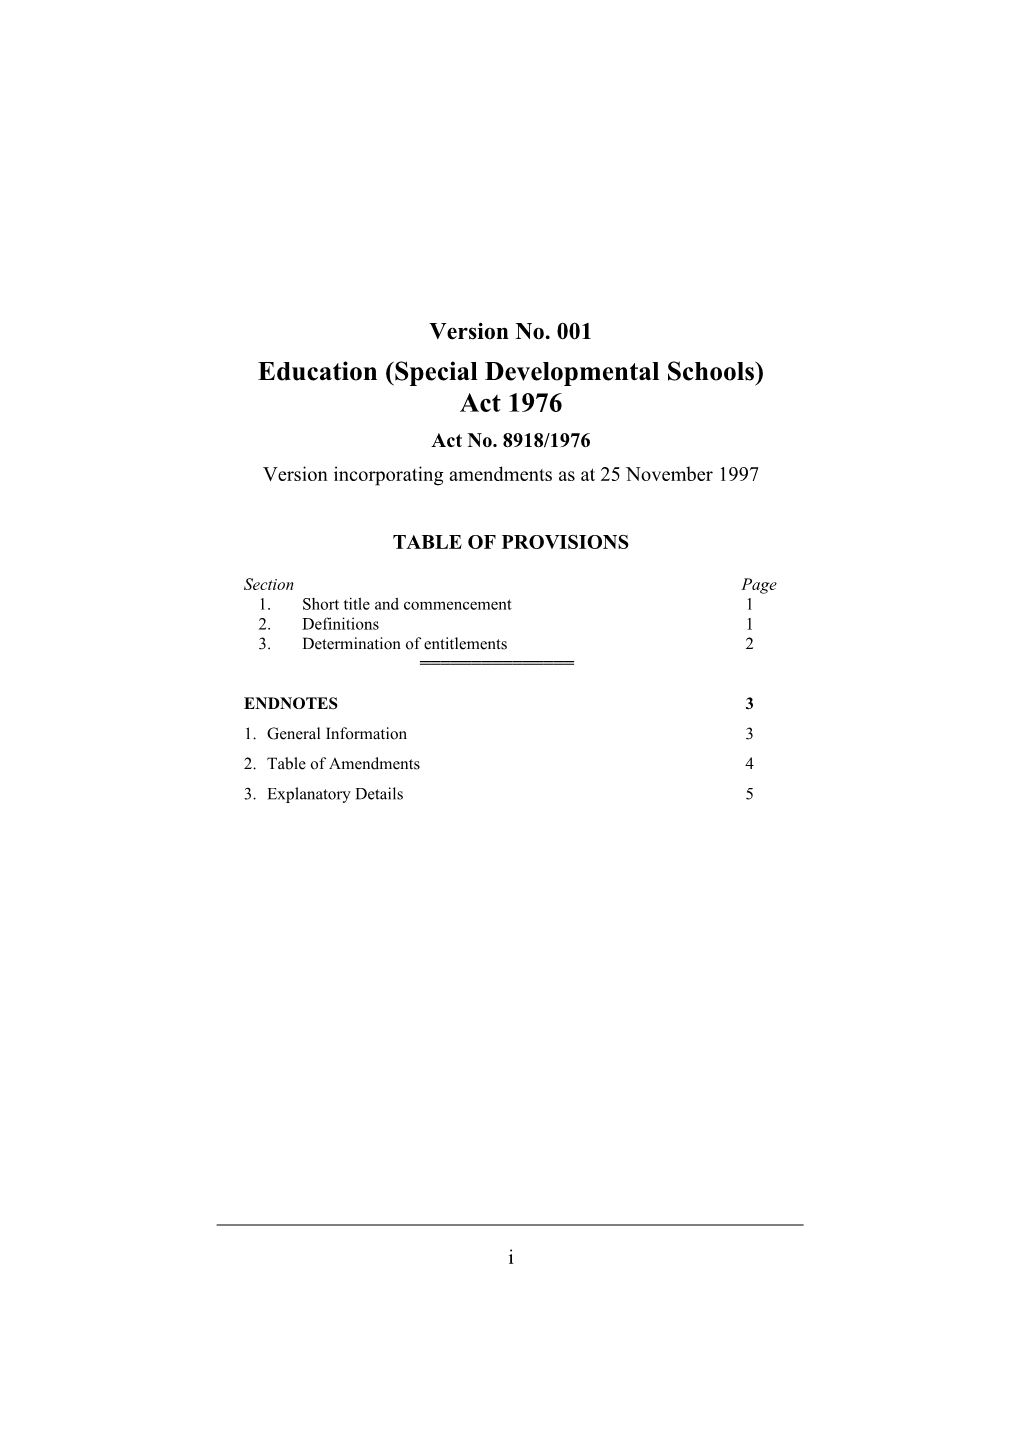 Education (Special Developmental Schools) Act 1976